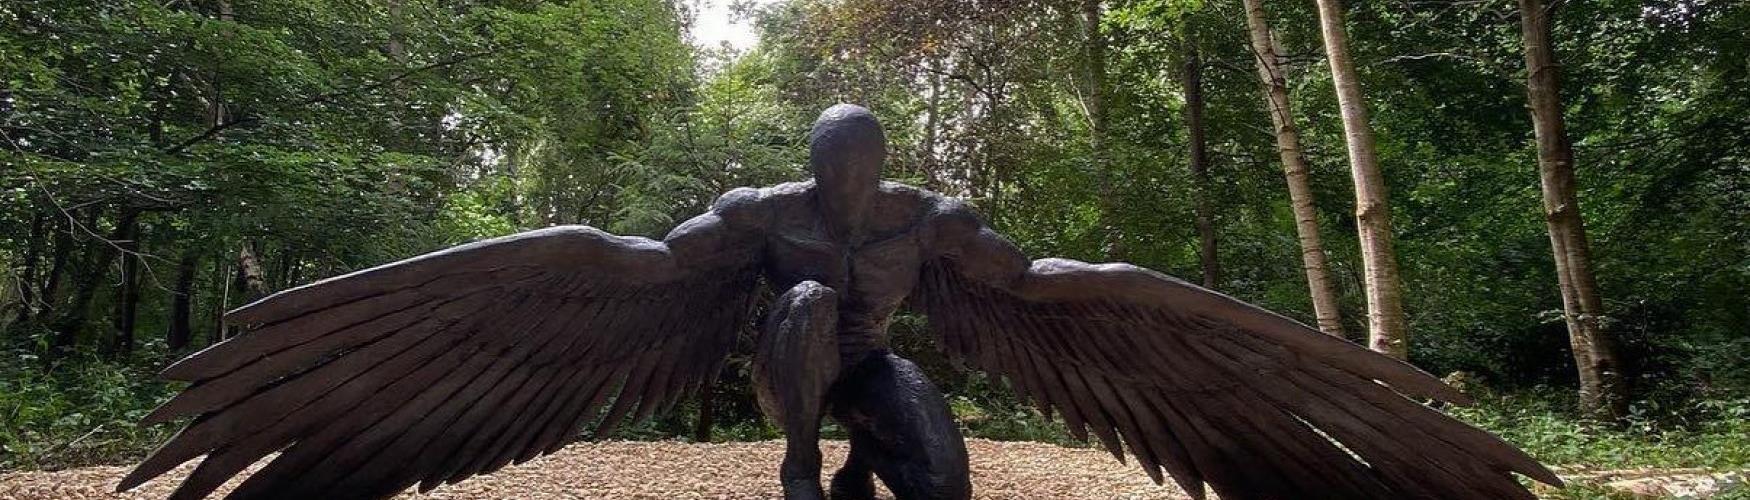 Crouching angel sculpture at Cotswold Sculpture Park